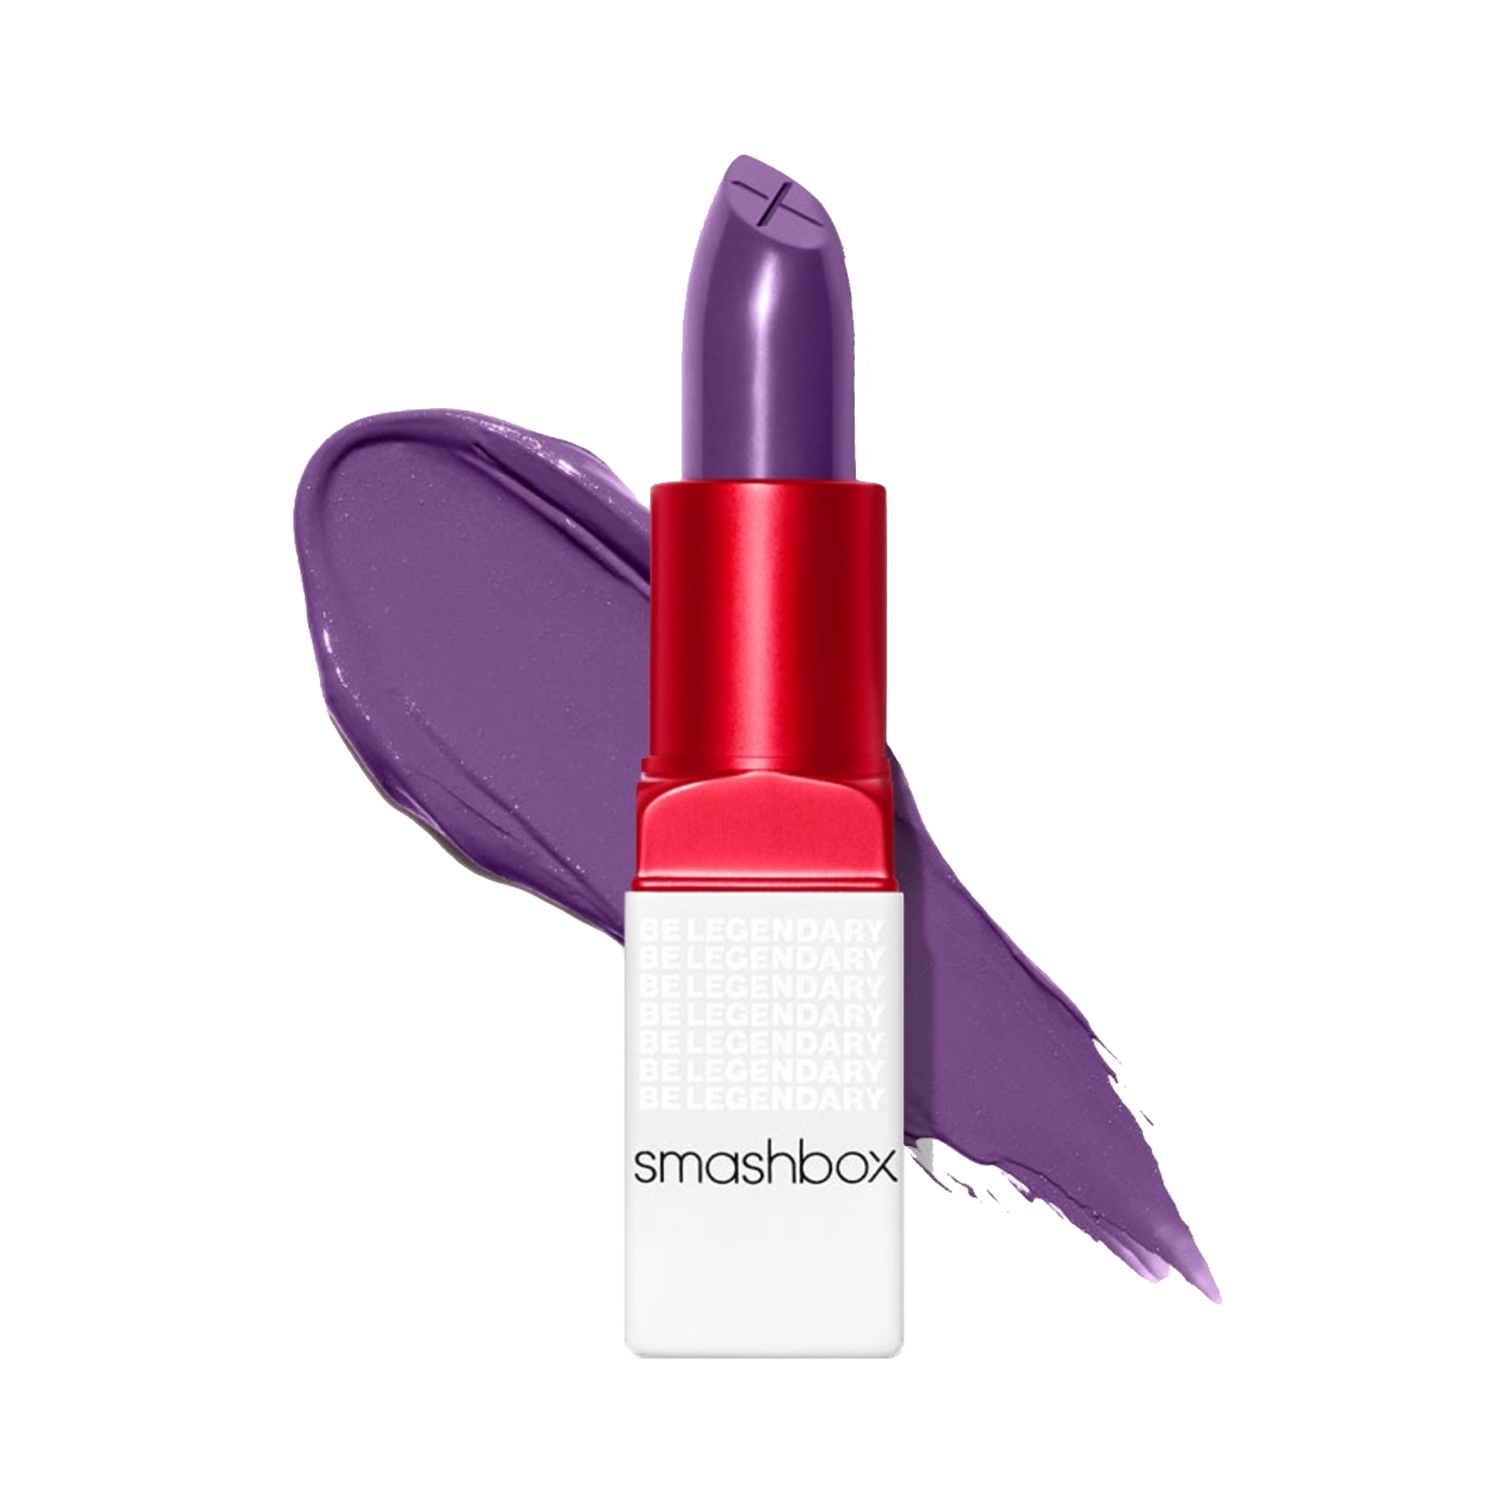 Smashbox | Smashbox Be Legendary Prime & Plush Lipstick - Cool Mauve (3.4g)